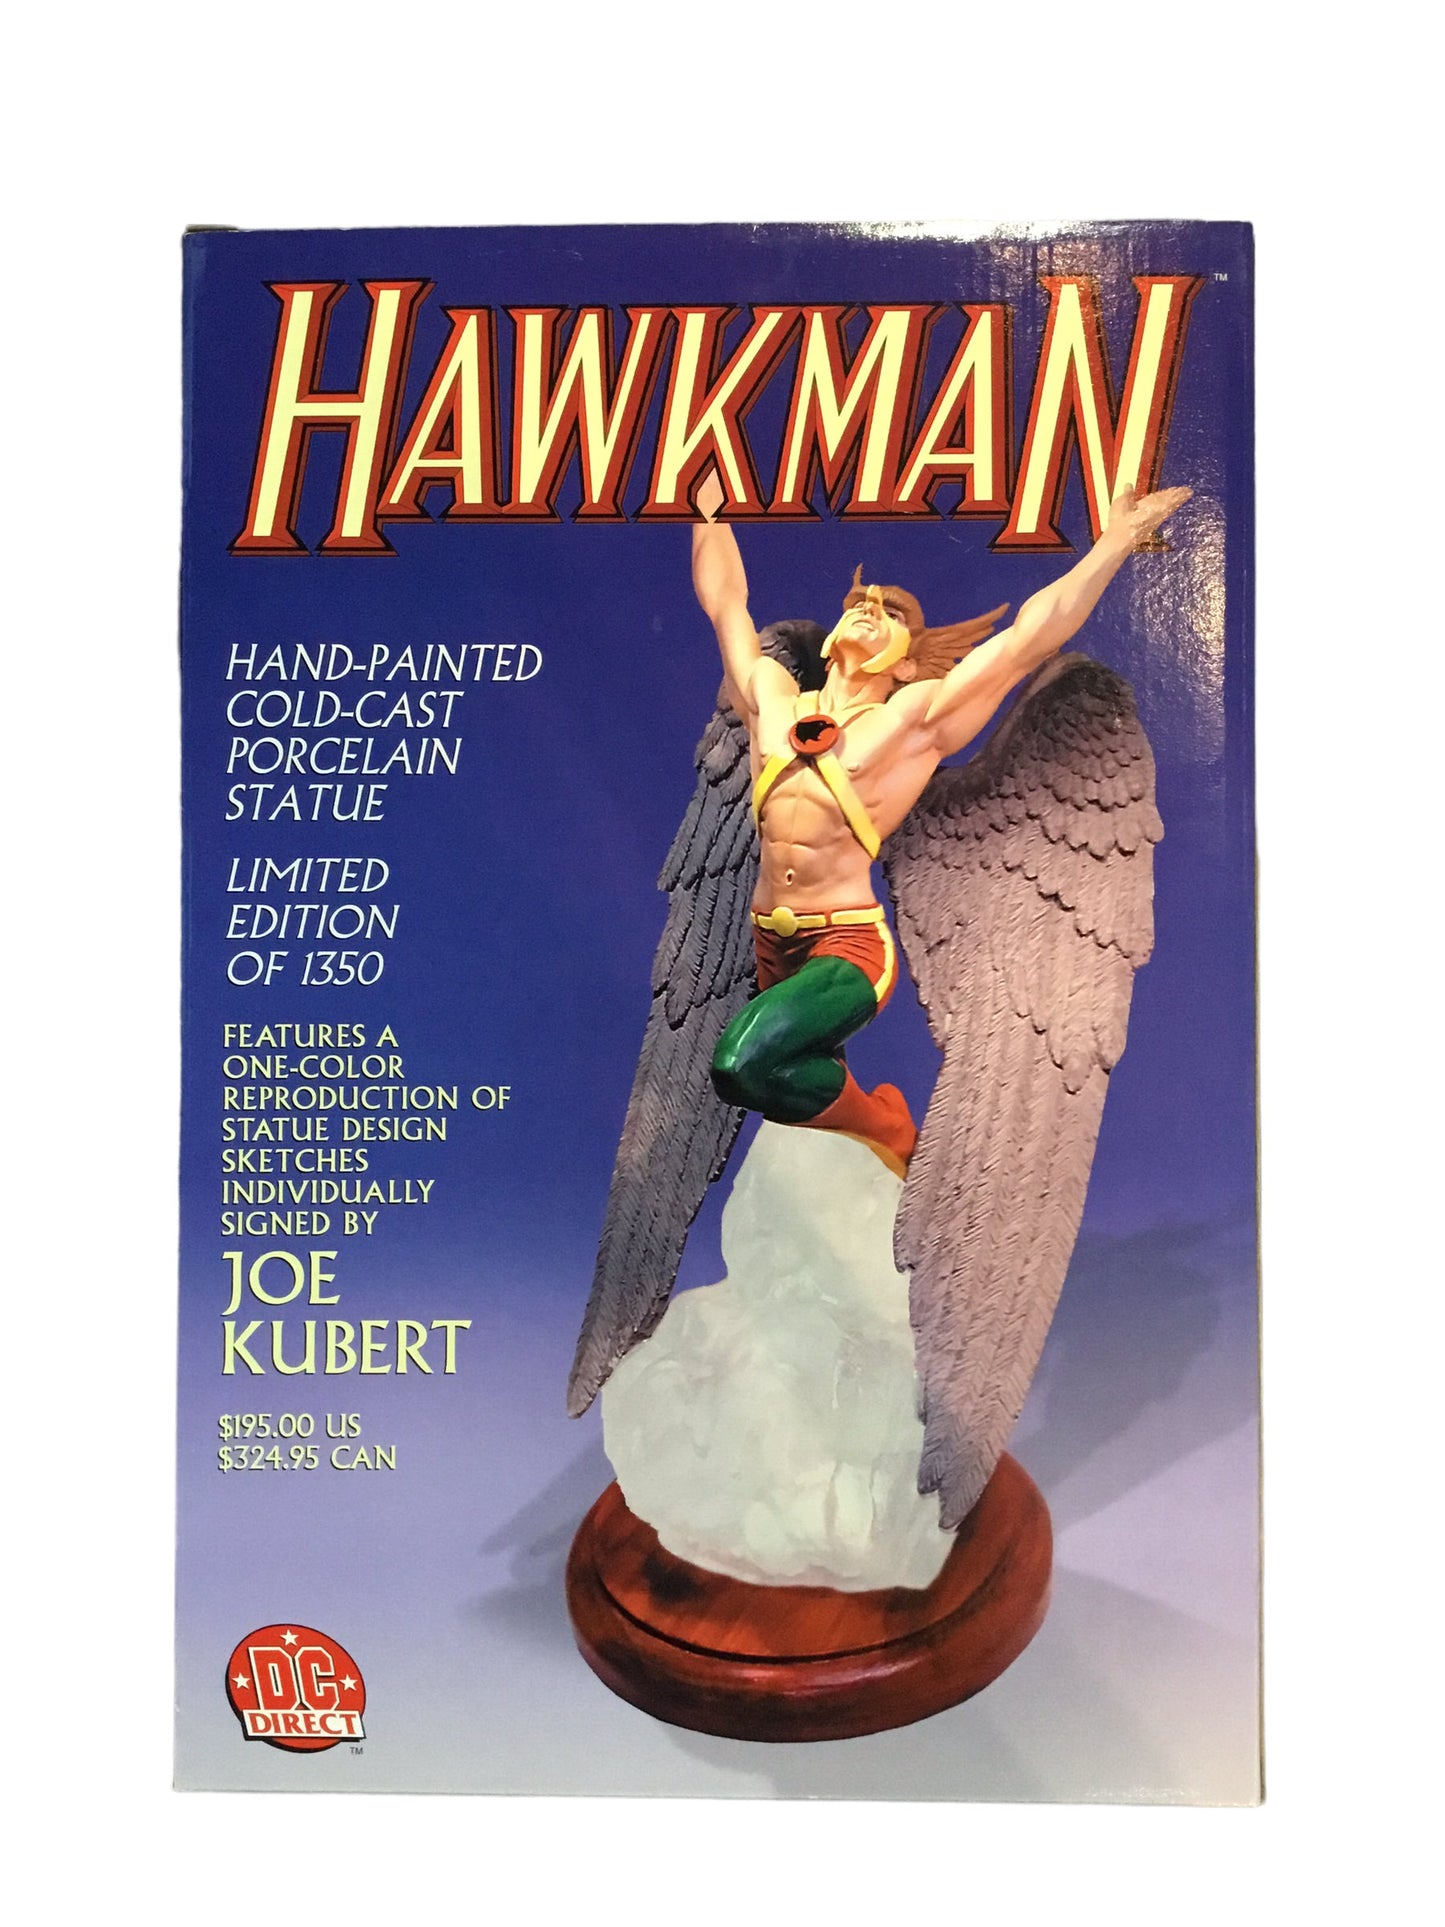 Hawkman Limited Edition Porcelain Statue - Joe Kubert signed print - DC Comics 2001